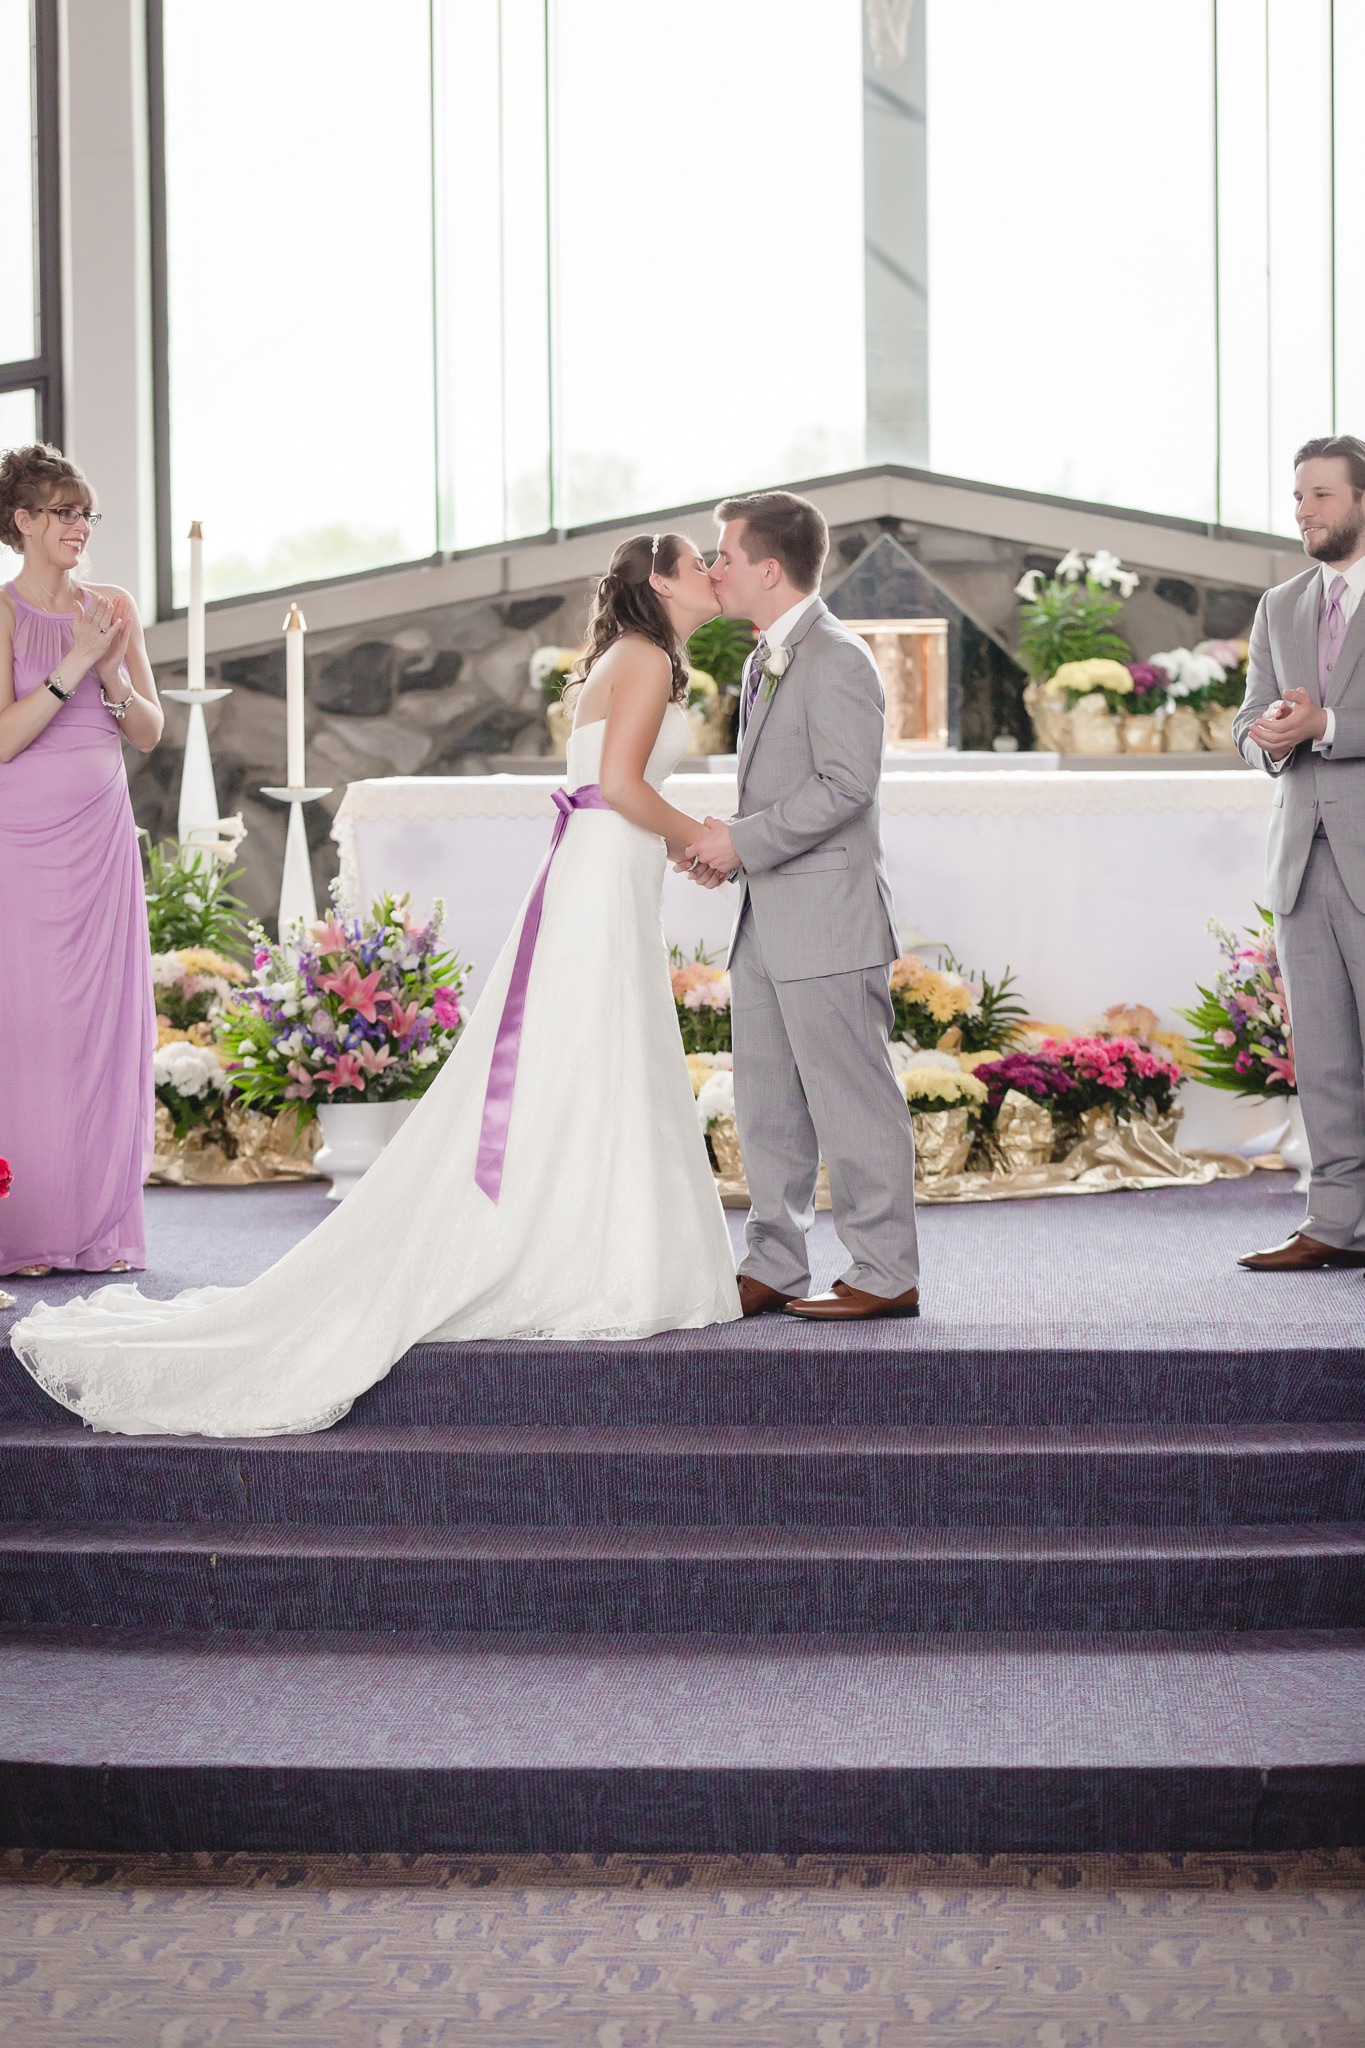 First kiss at wedding ceremony at St. Malachy Catholic Church